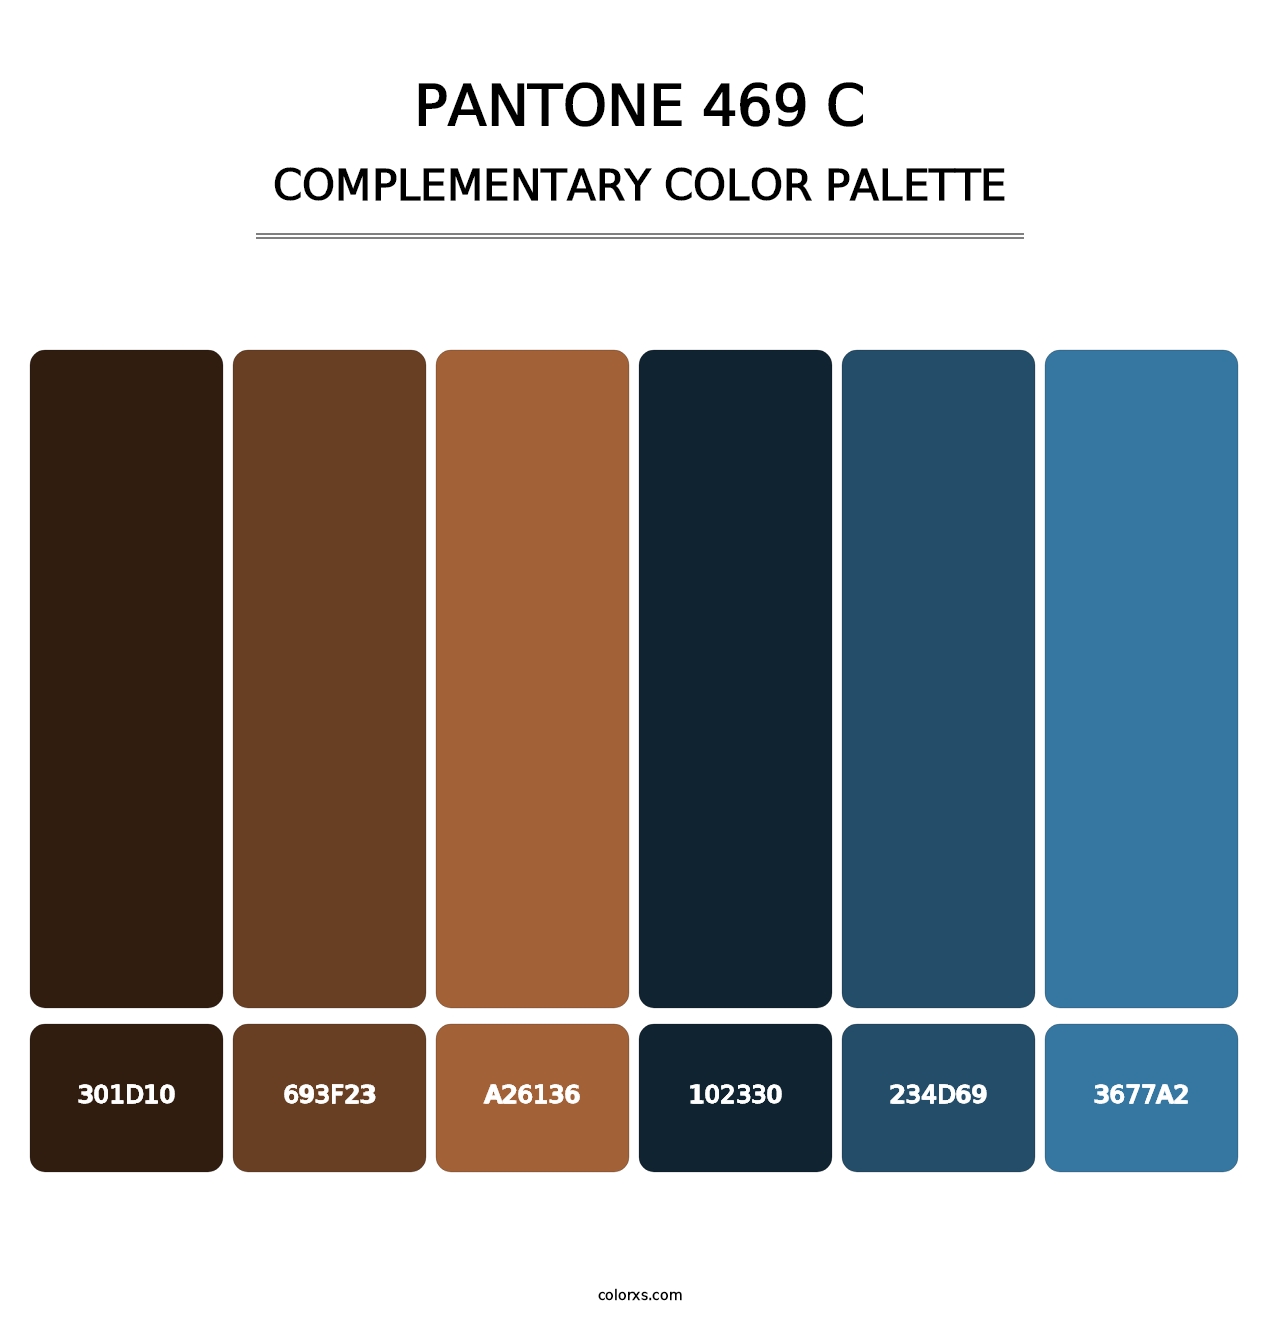 PANTONE 469 C - Complementary Color Palette